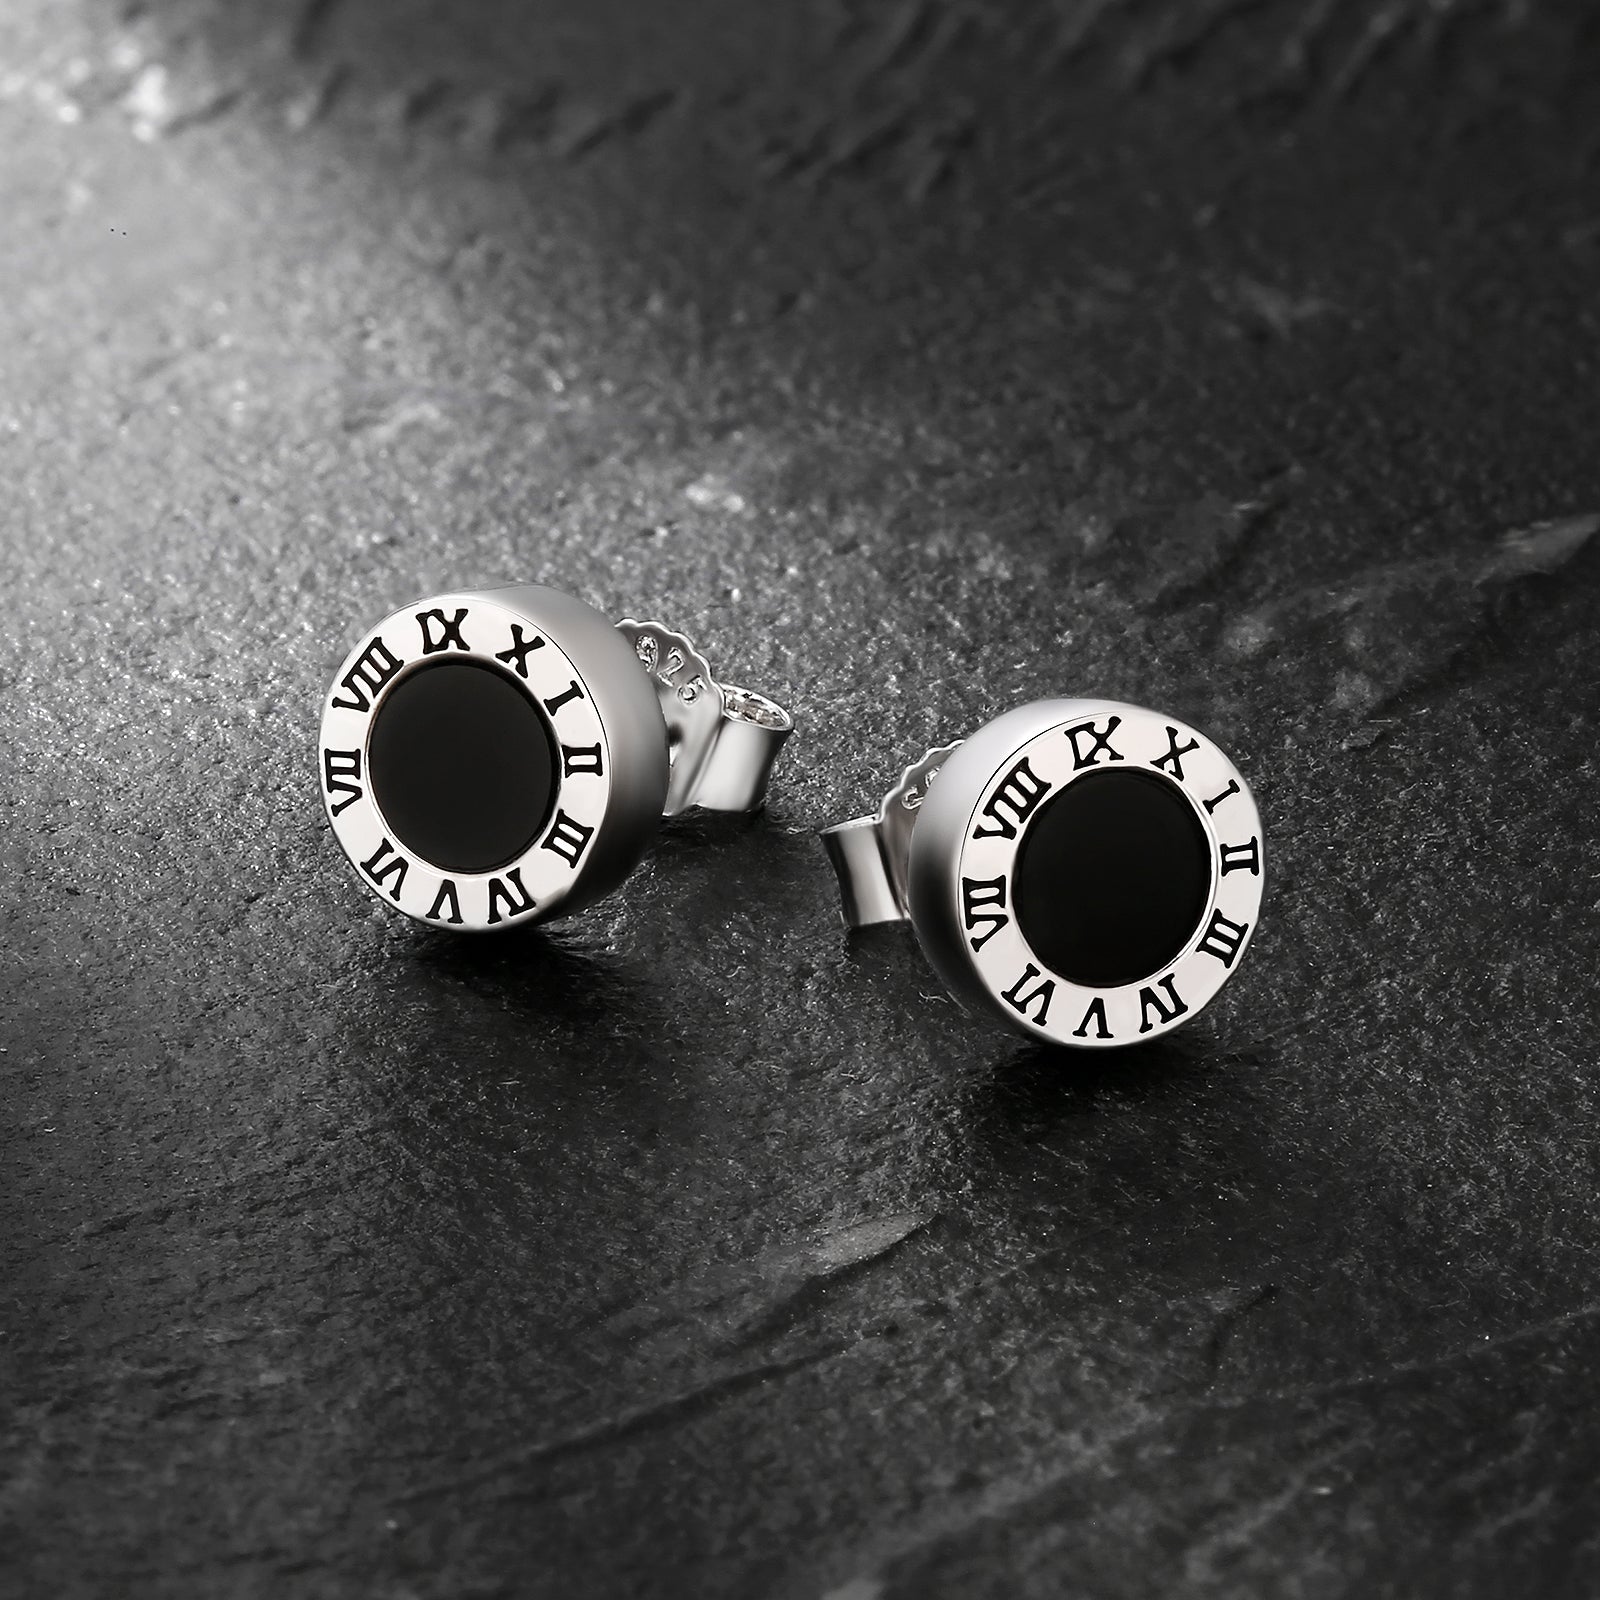 Wholesale Men's Earrings 8mm Roman Numerals Black Agate Round Iced Stud Earrings for Men